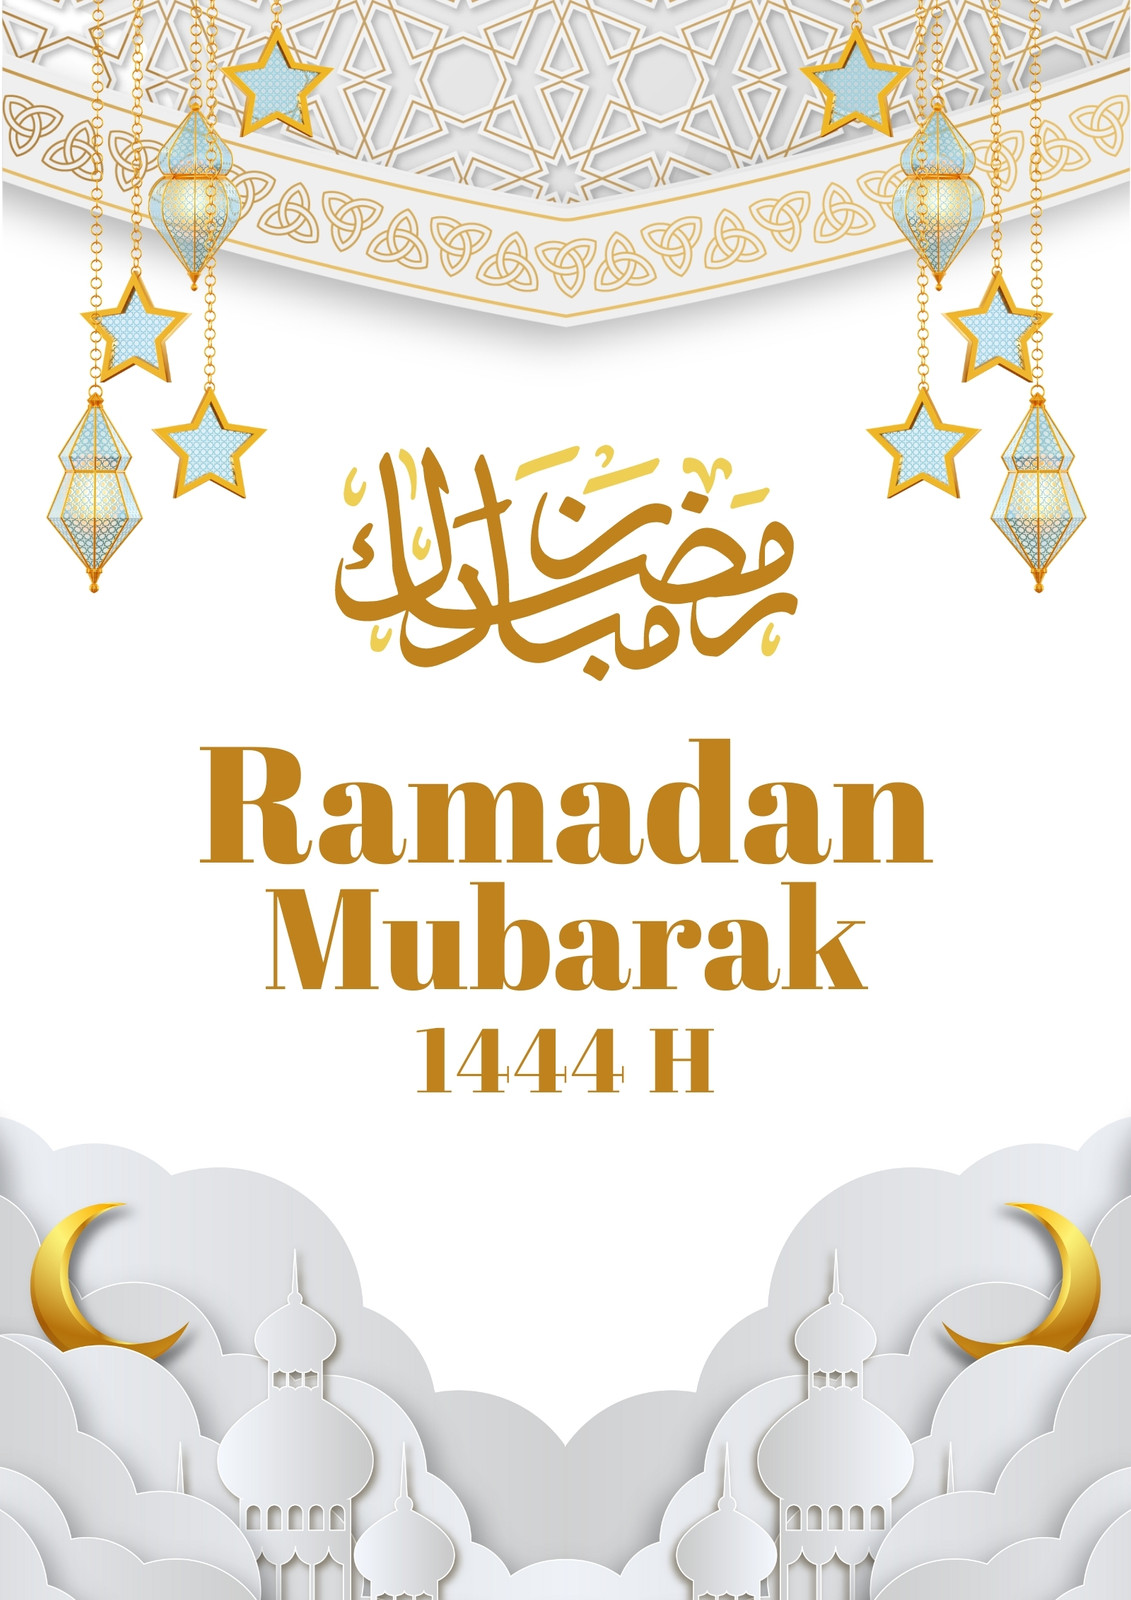 Page 2 - Free and customizable ramadan templates